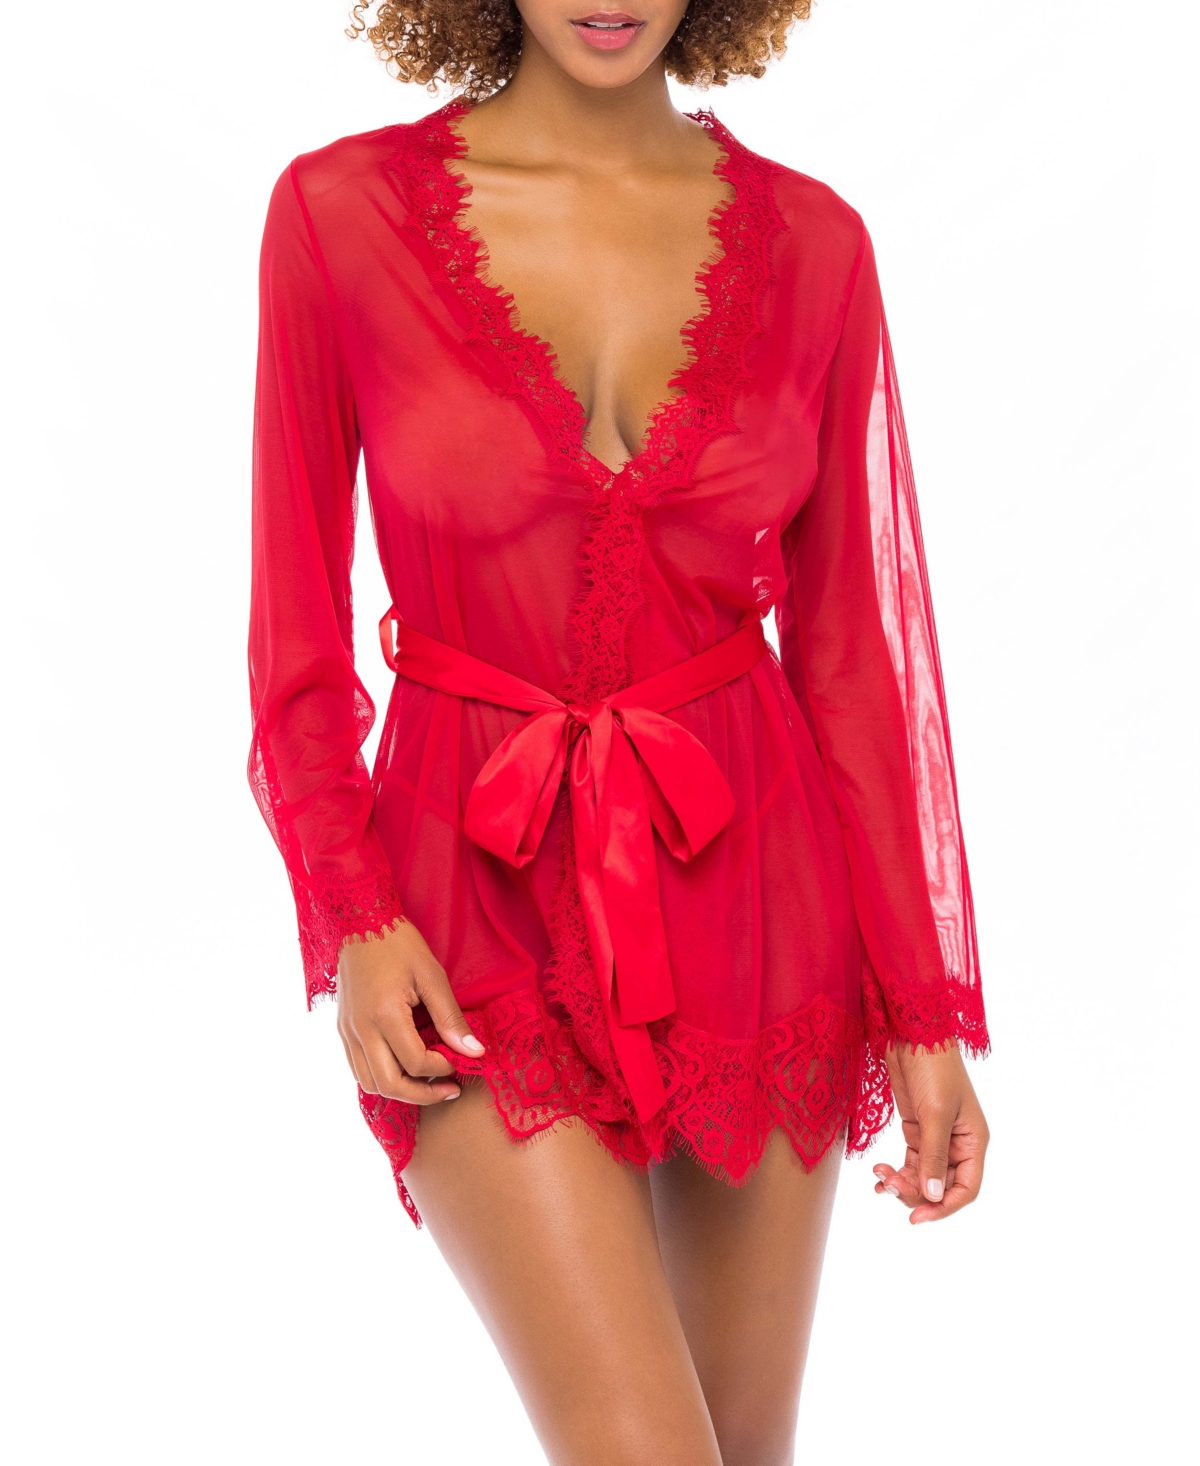 Eyelash Lace Robe with Satin Sash & Thong 2pc Lingerie Set - Red